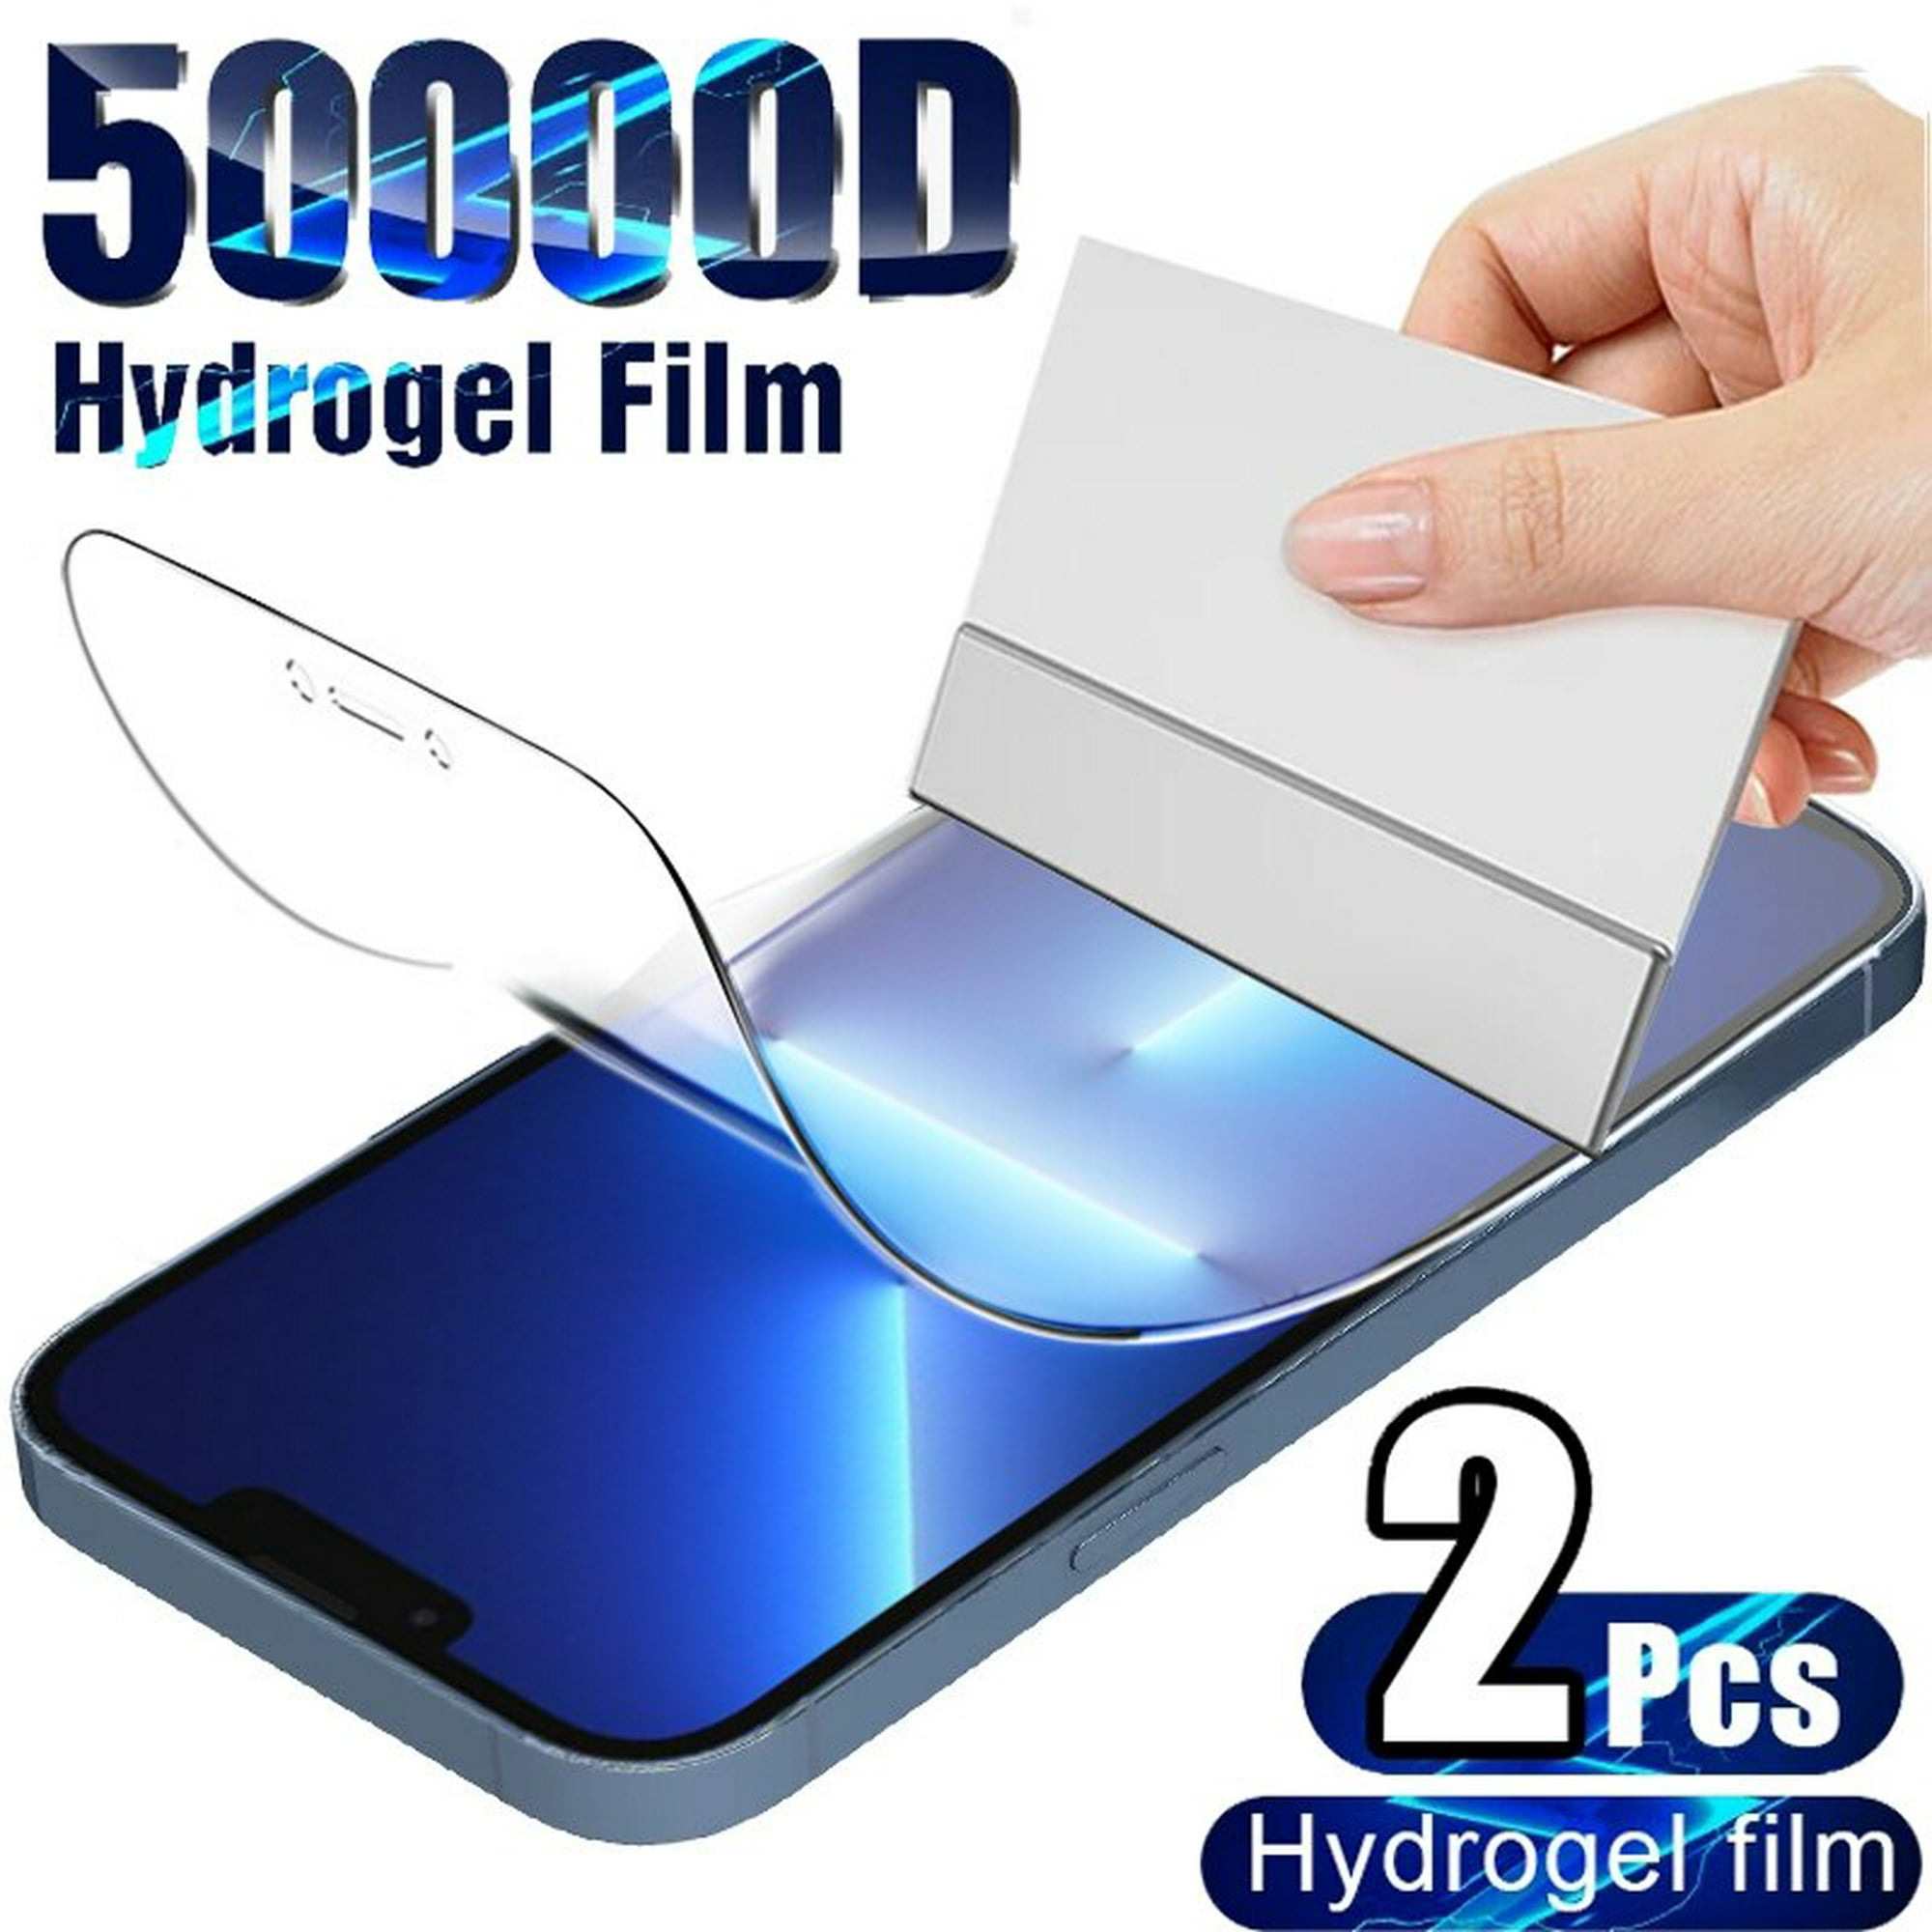 Película Iphone 13/13 Pro Kingshield Hydrogel Cobertura Total - Fosca -  Película para Celular - Magazine Luiza